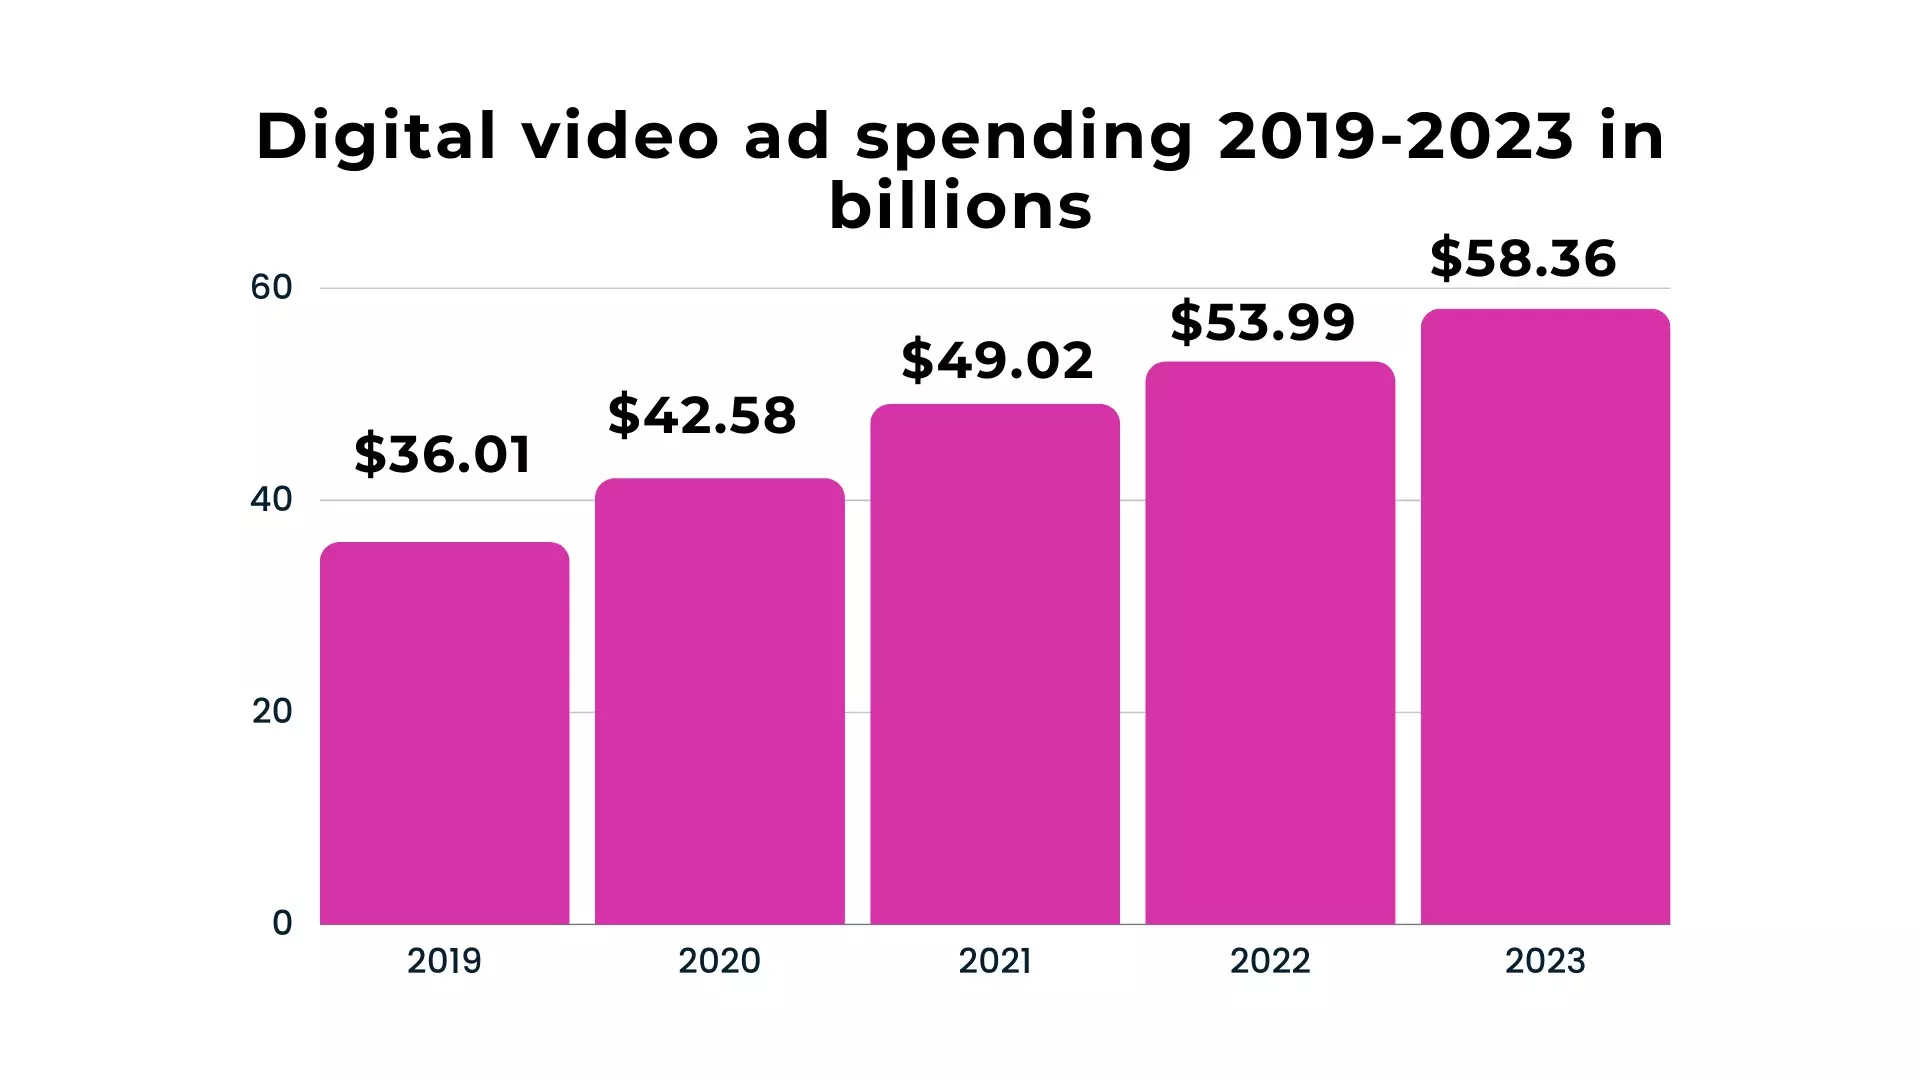 Digital video ad spending